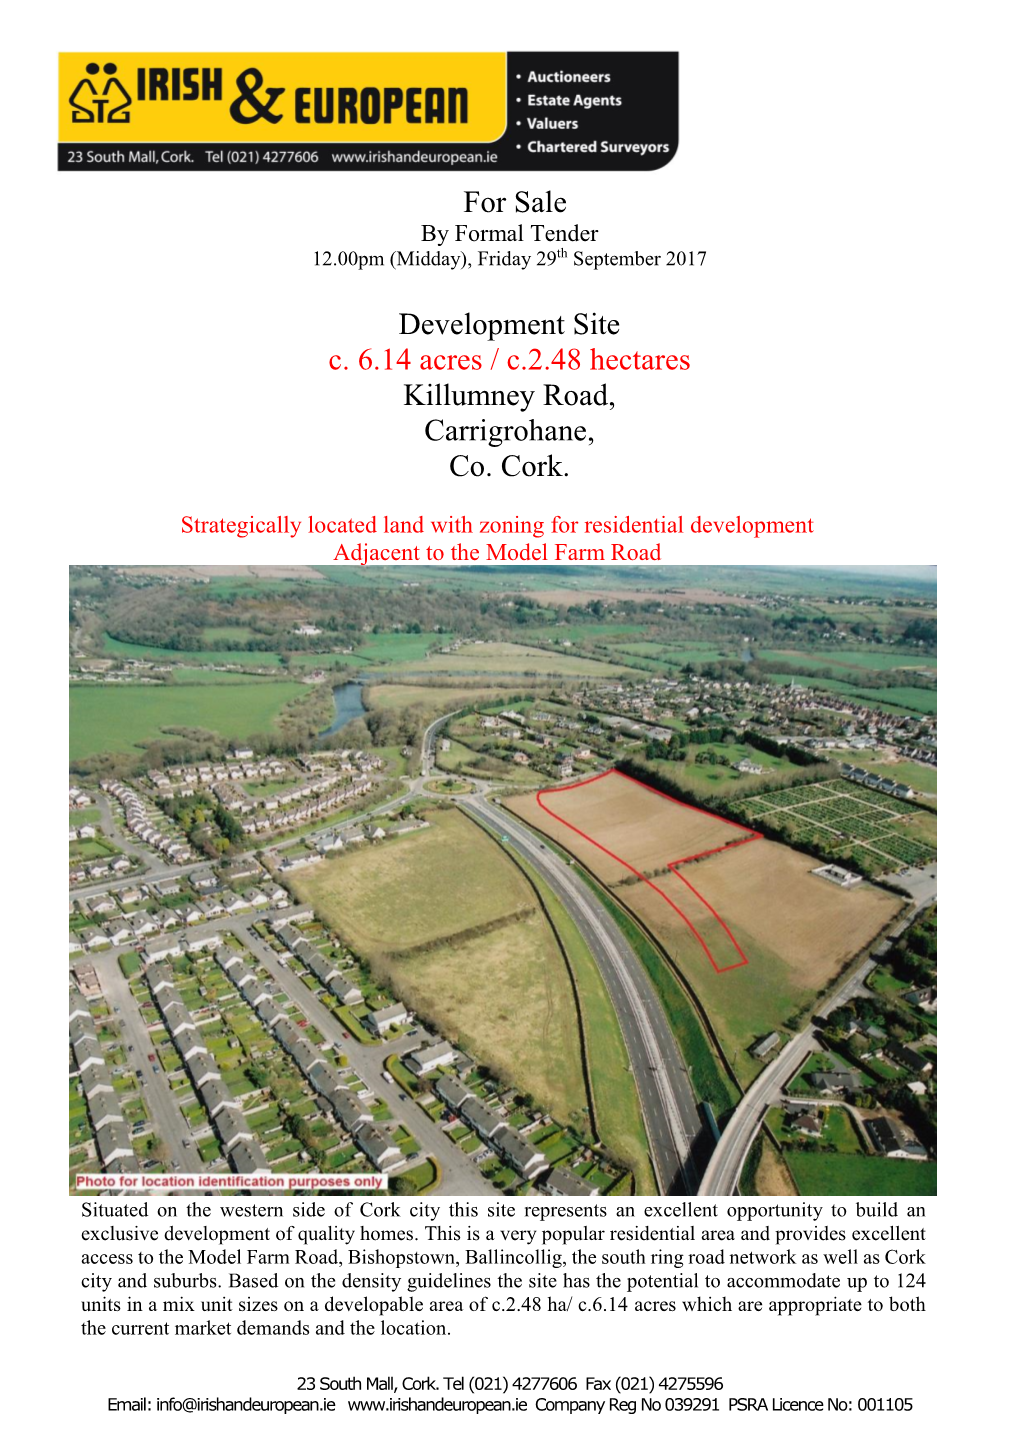 For Sale Development Site C. 6.14 Acres / C.2.48 Hectares Killumney